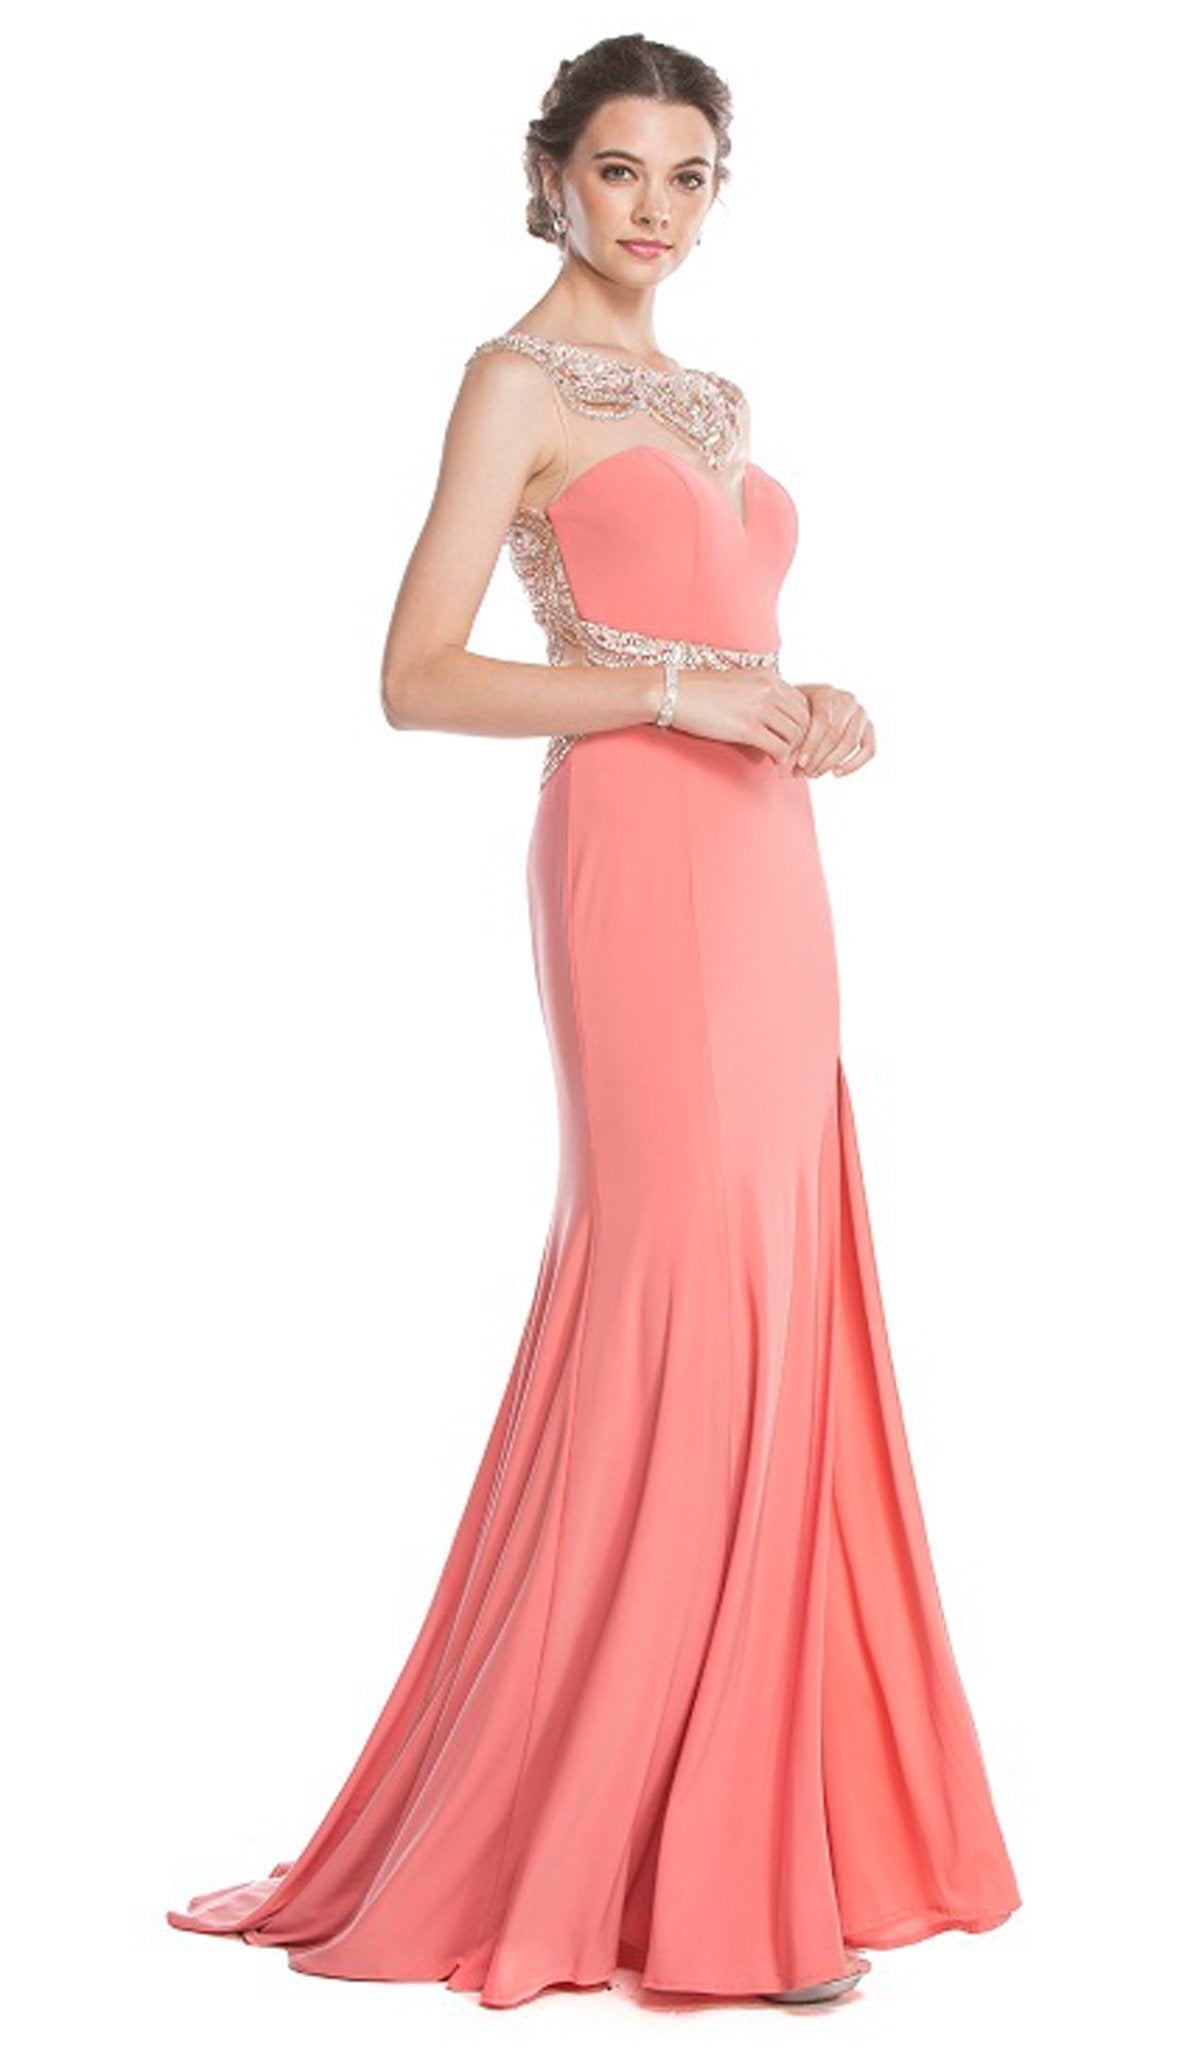 Image of Aspeed Design - Embellished Illusion Bateau Fitted Prom Dress